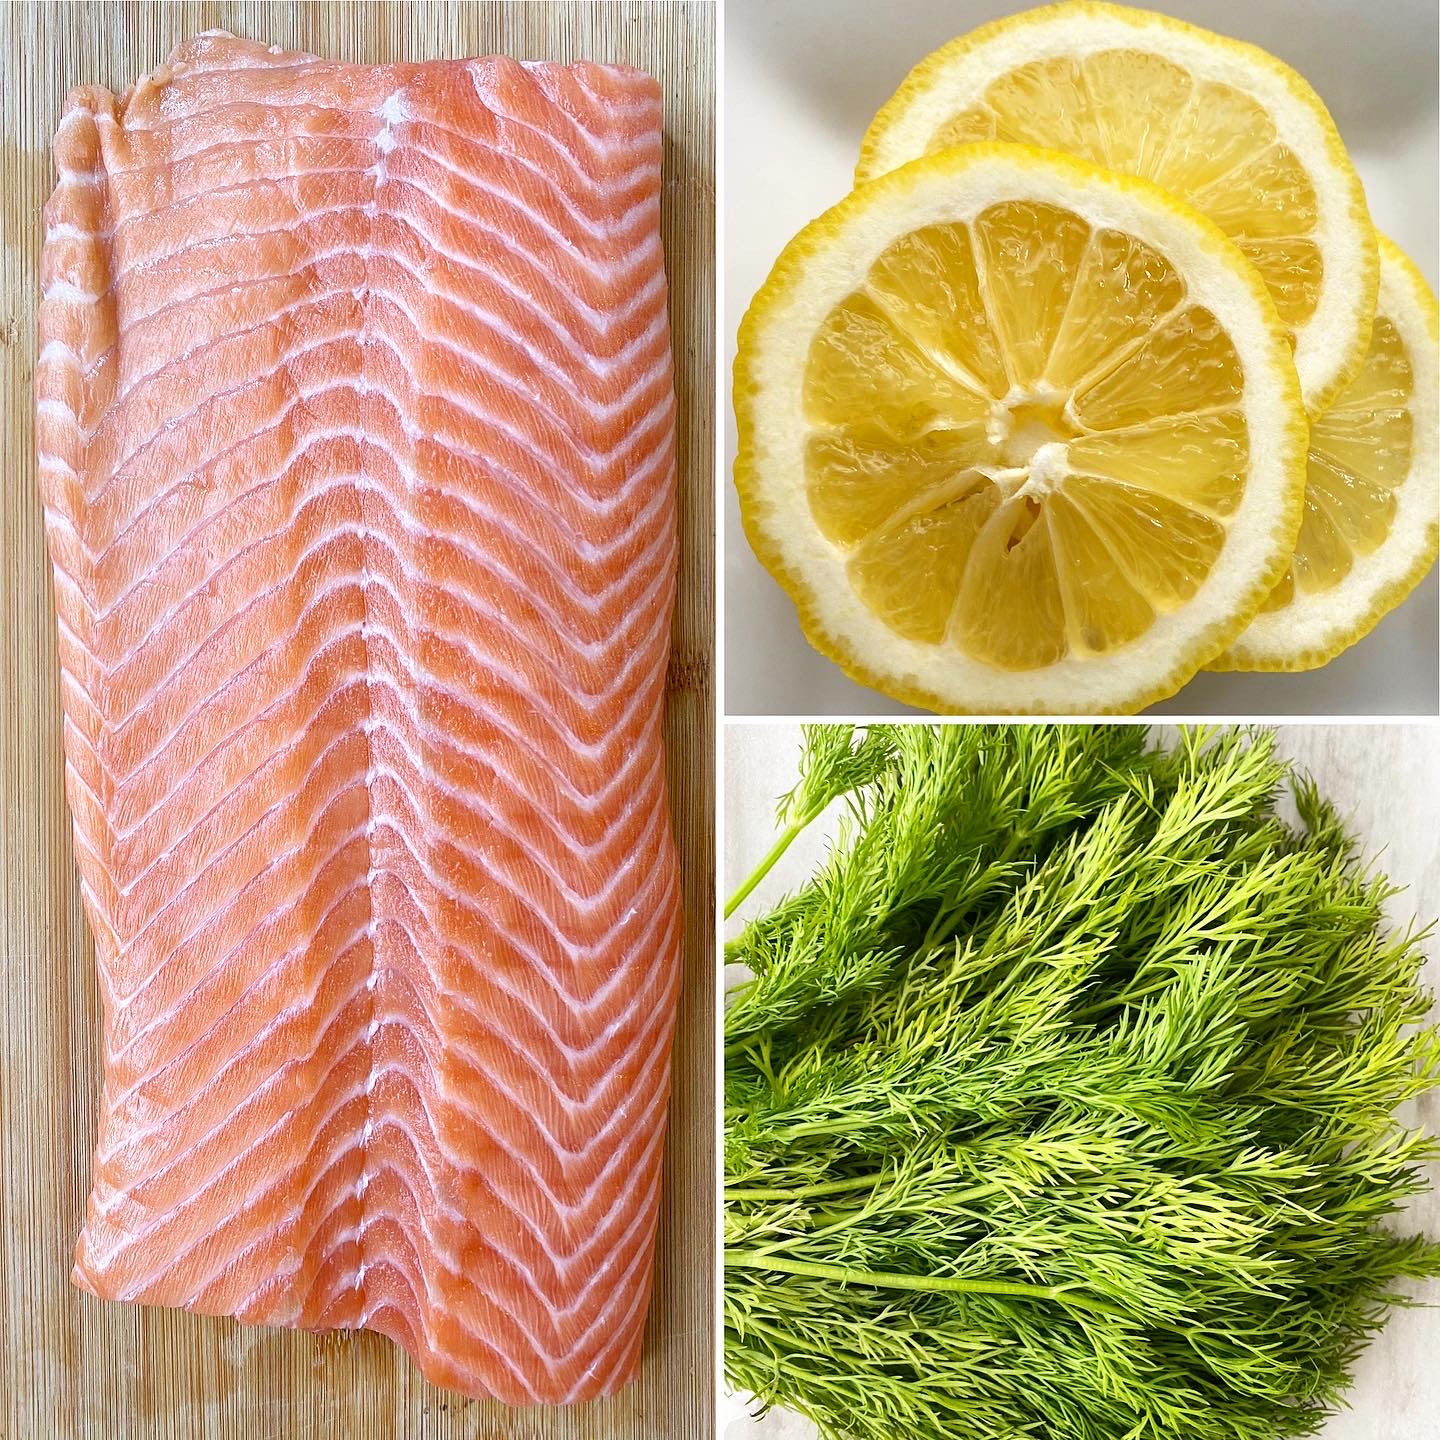 collage of raw salmon, fresh dill, lemon slices